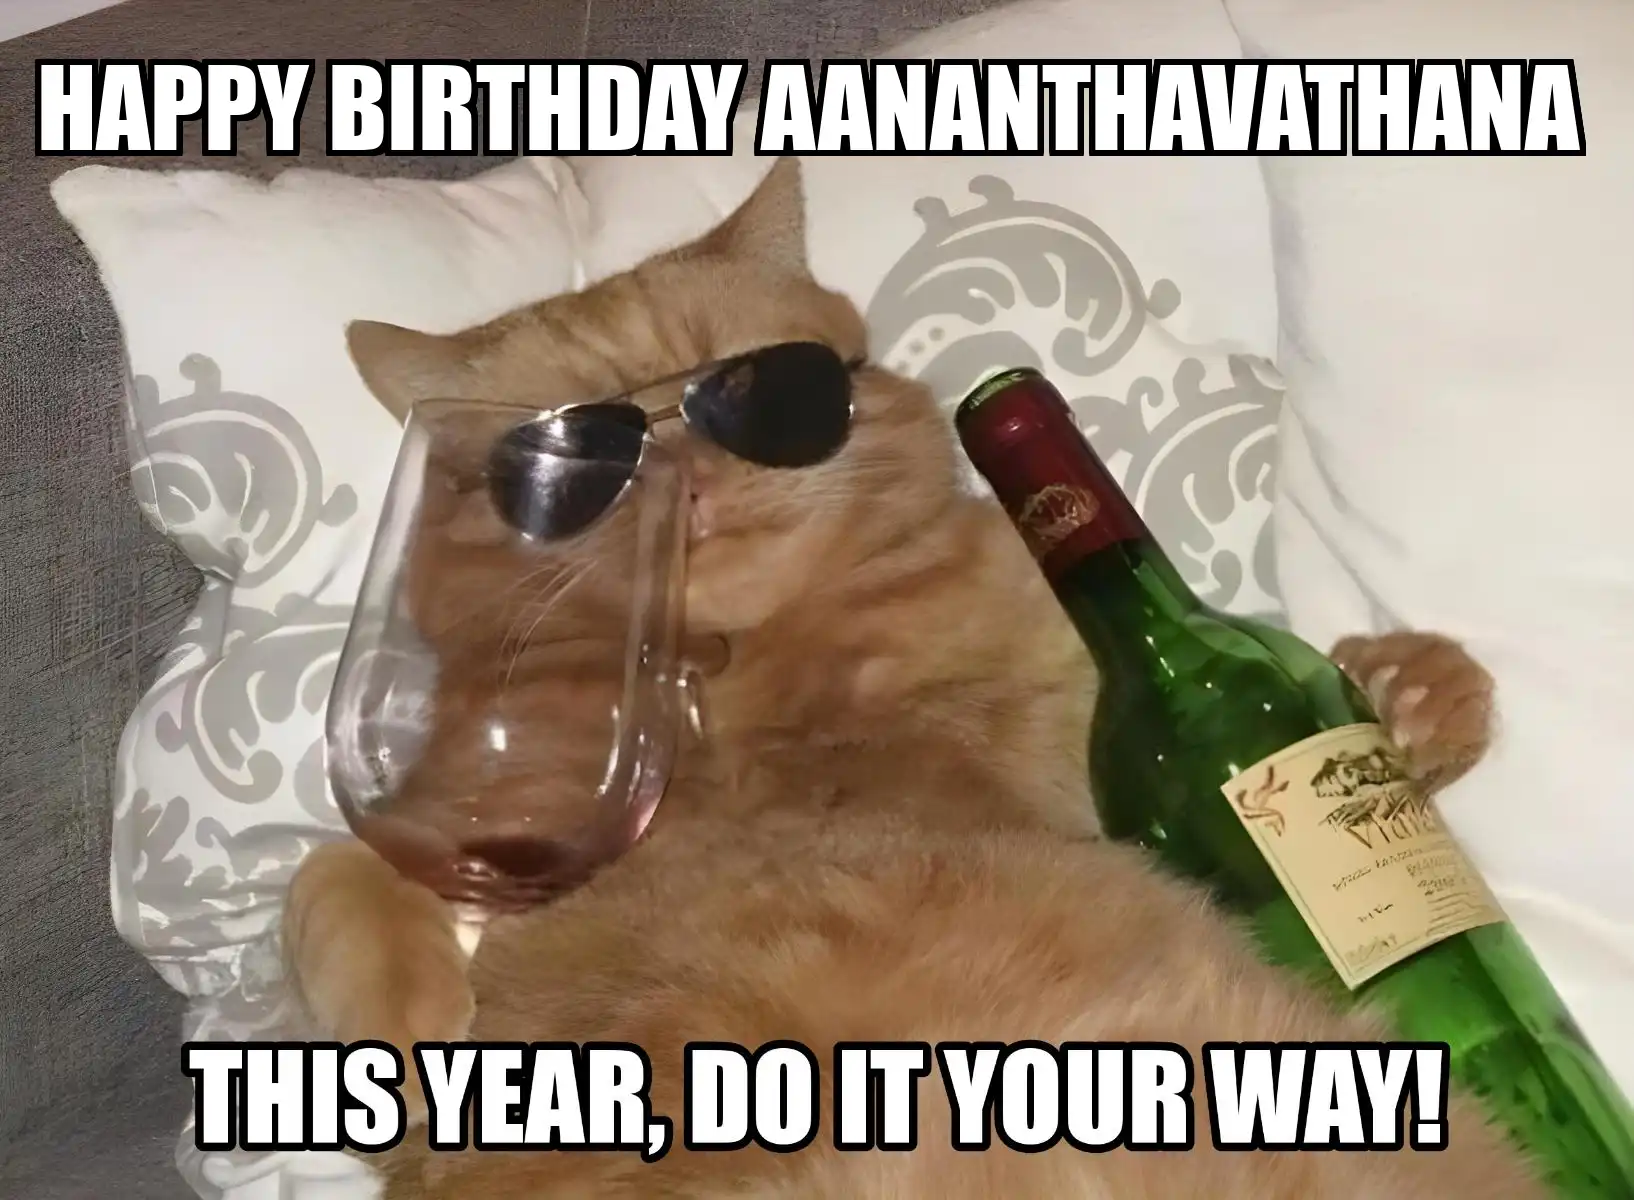 Happy Birthday Aananthavathana This Year Do It Your Way Meme